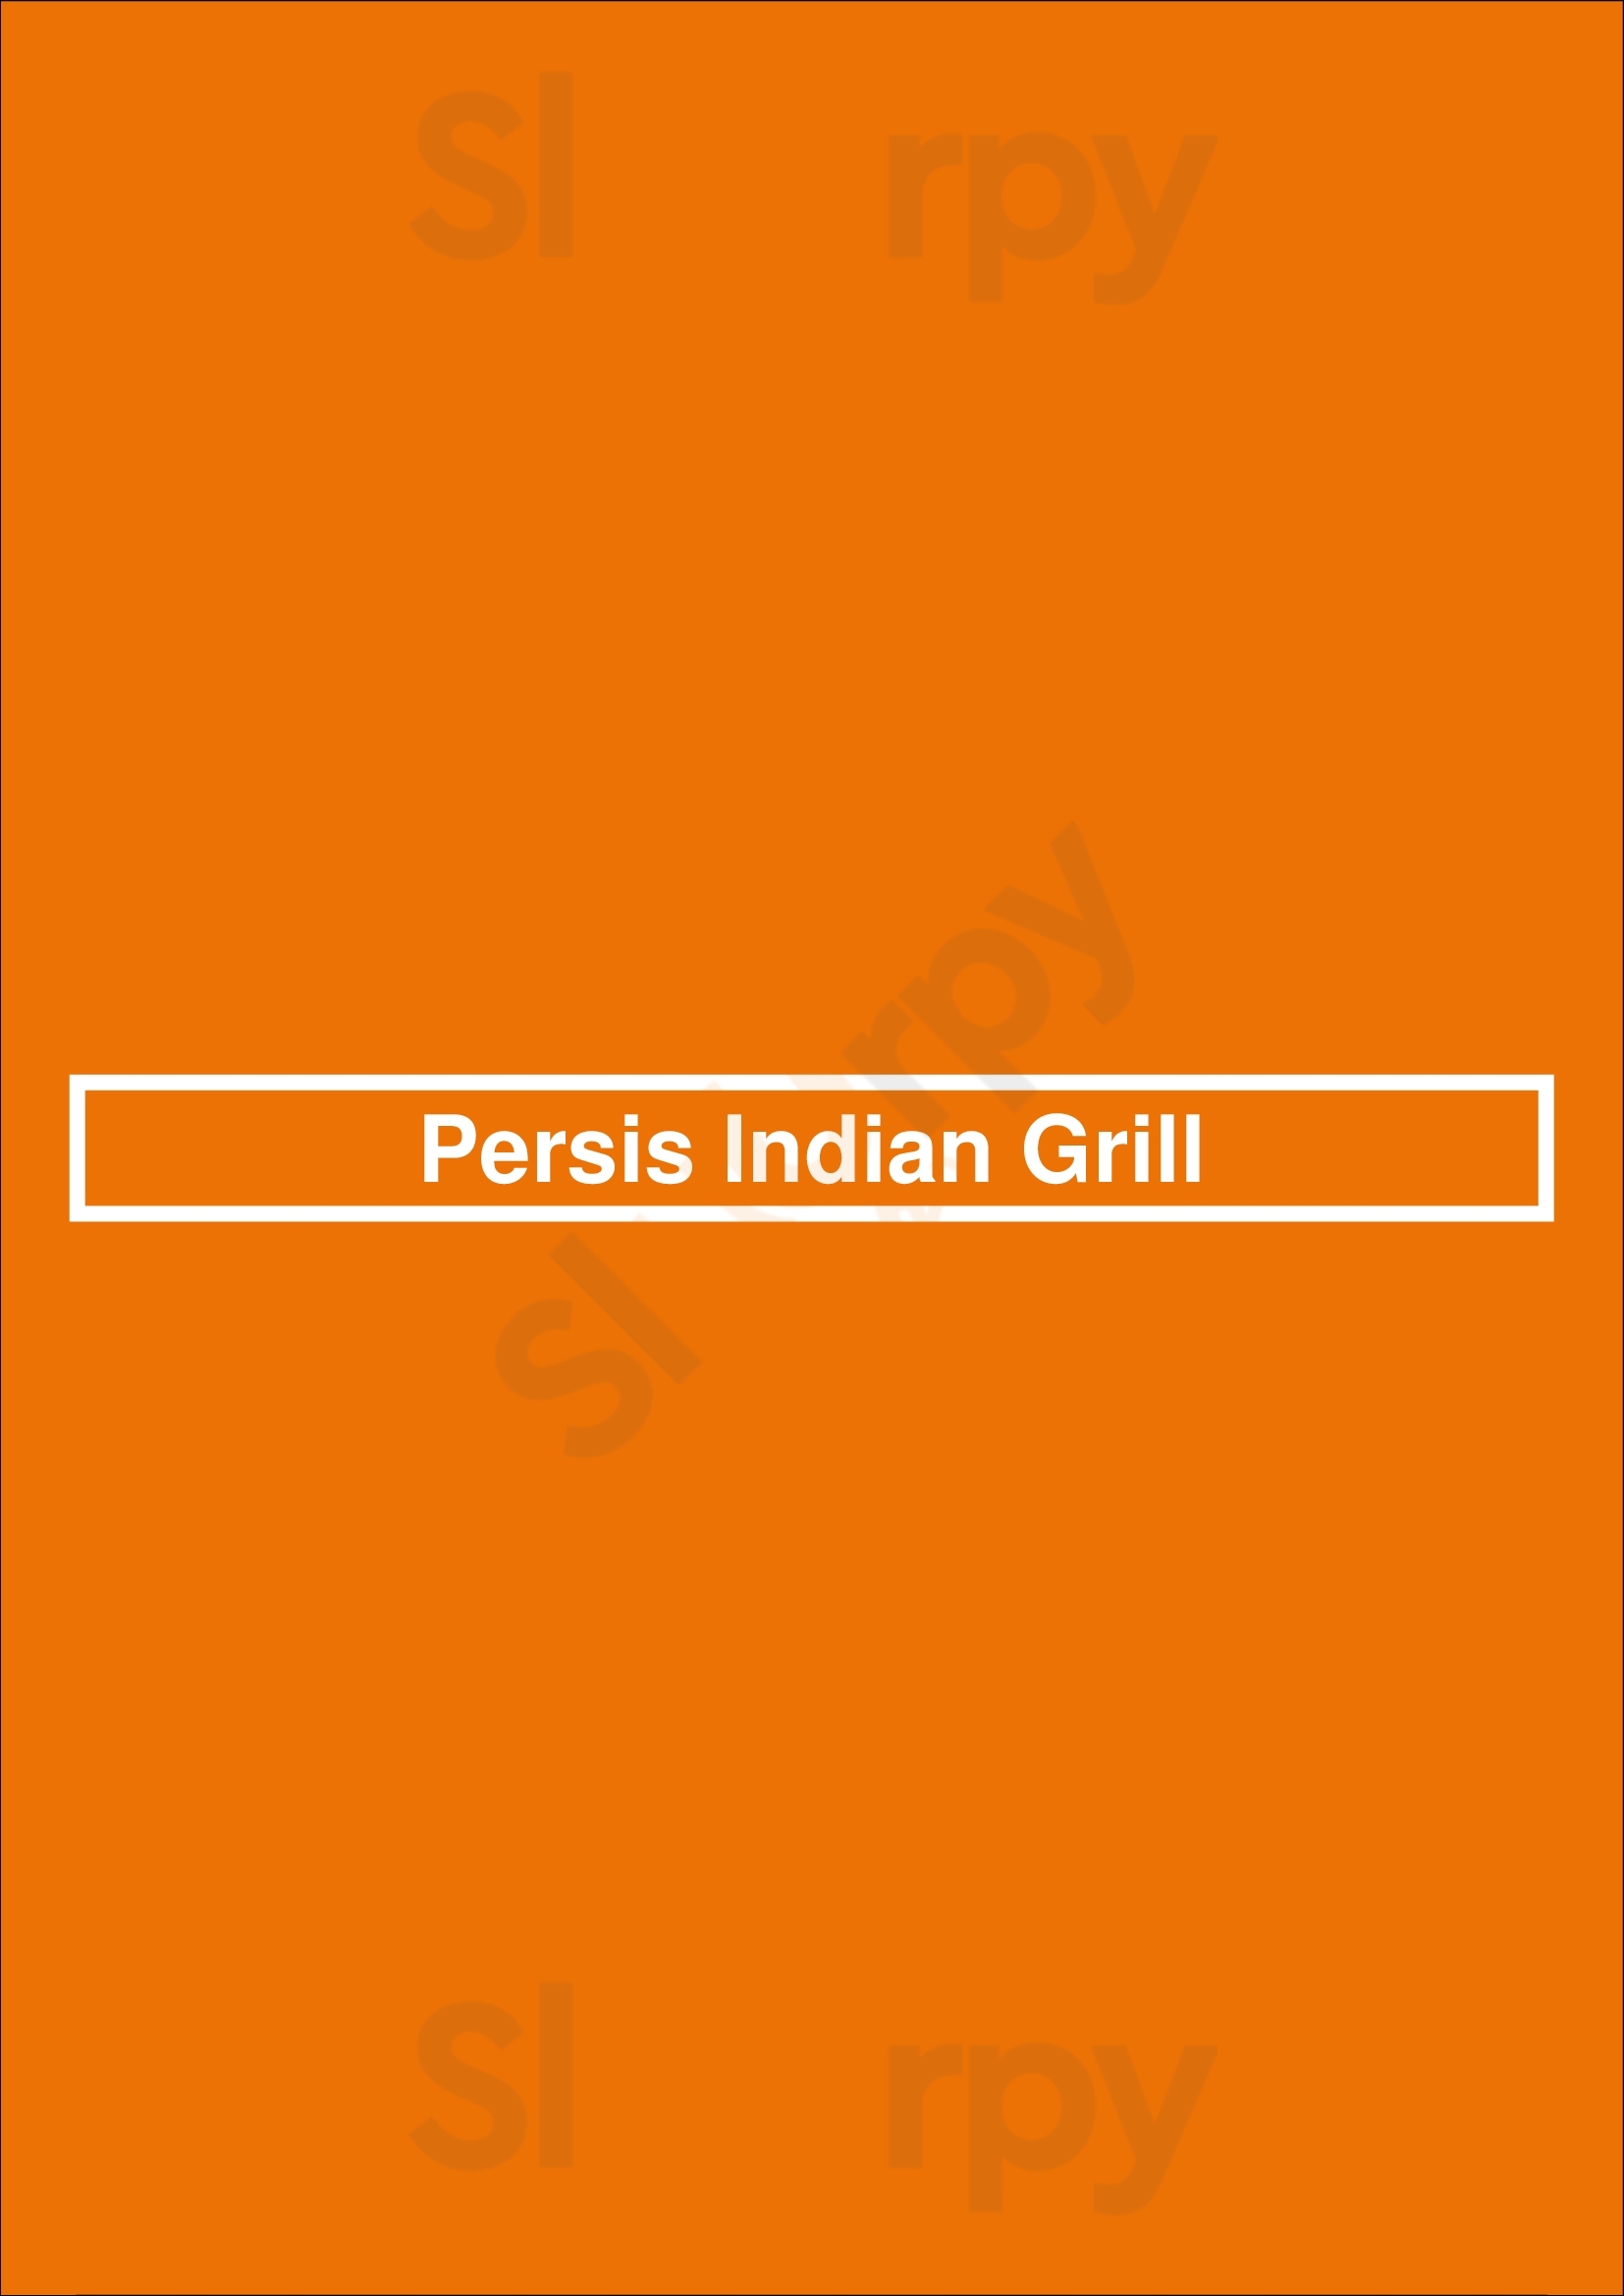 Persis Indian Grill Greenville Menu - 1